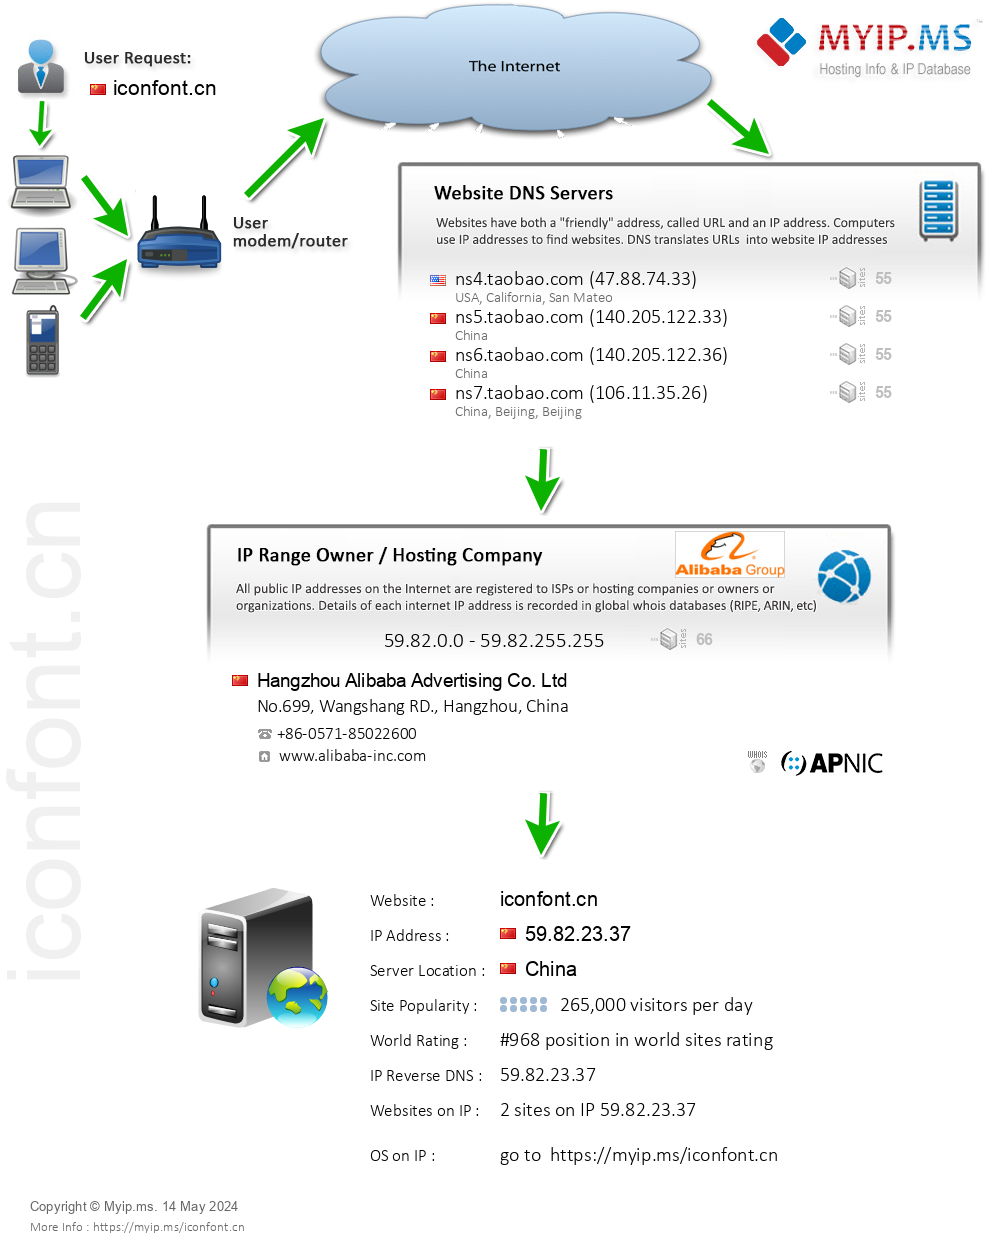 Iconfont.cn - Website Hosting Visual IP Diagram